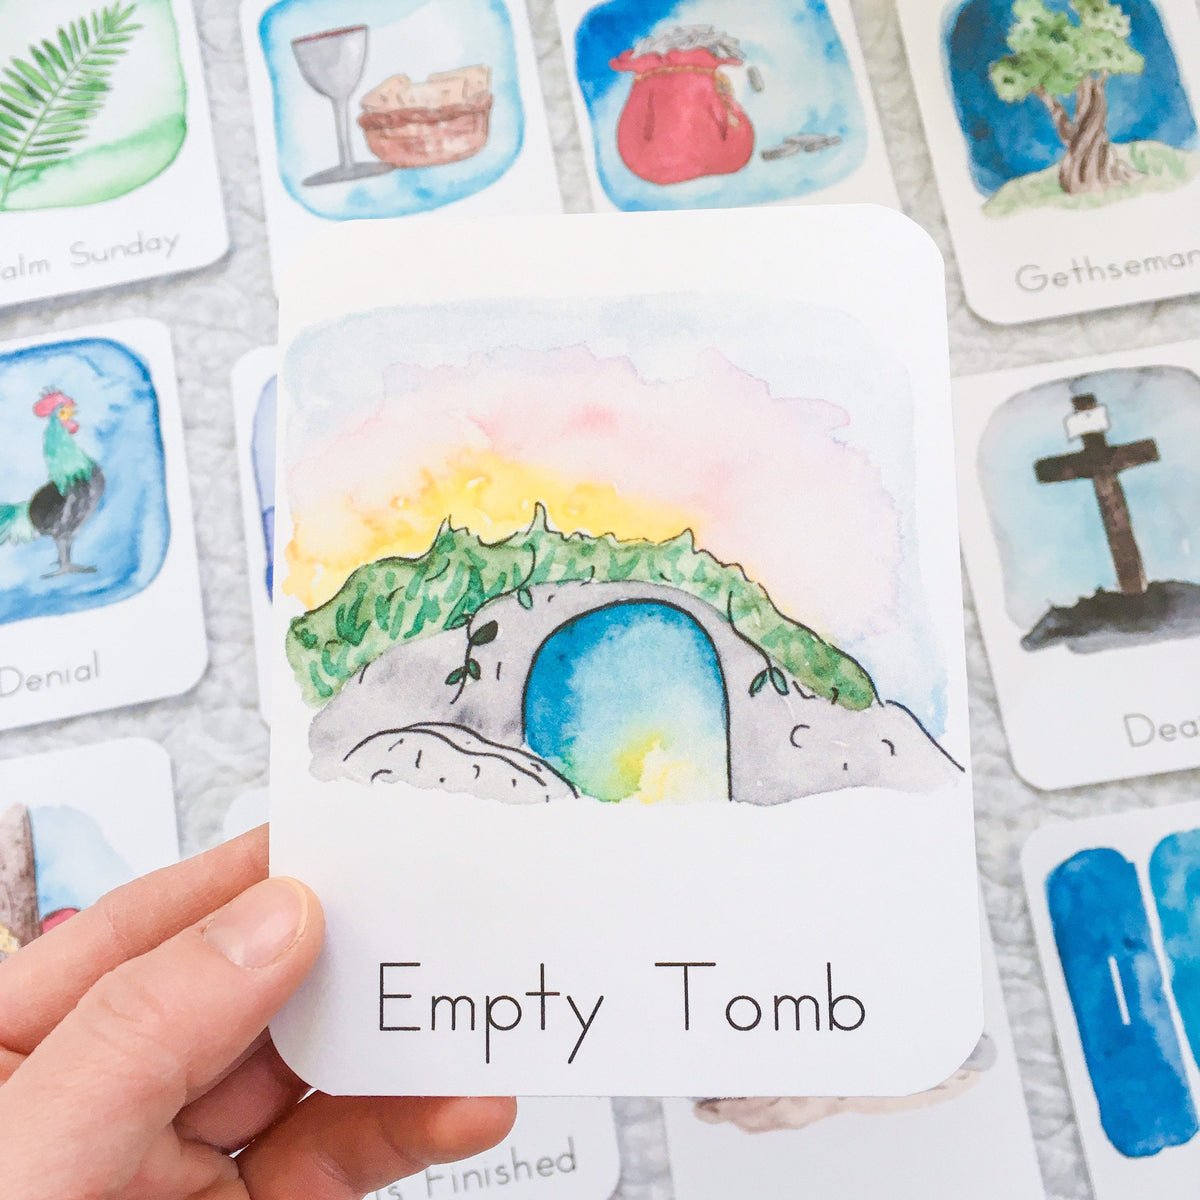 Easter Story Cards | Digital Download